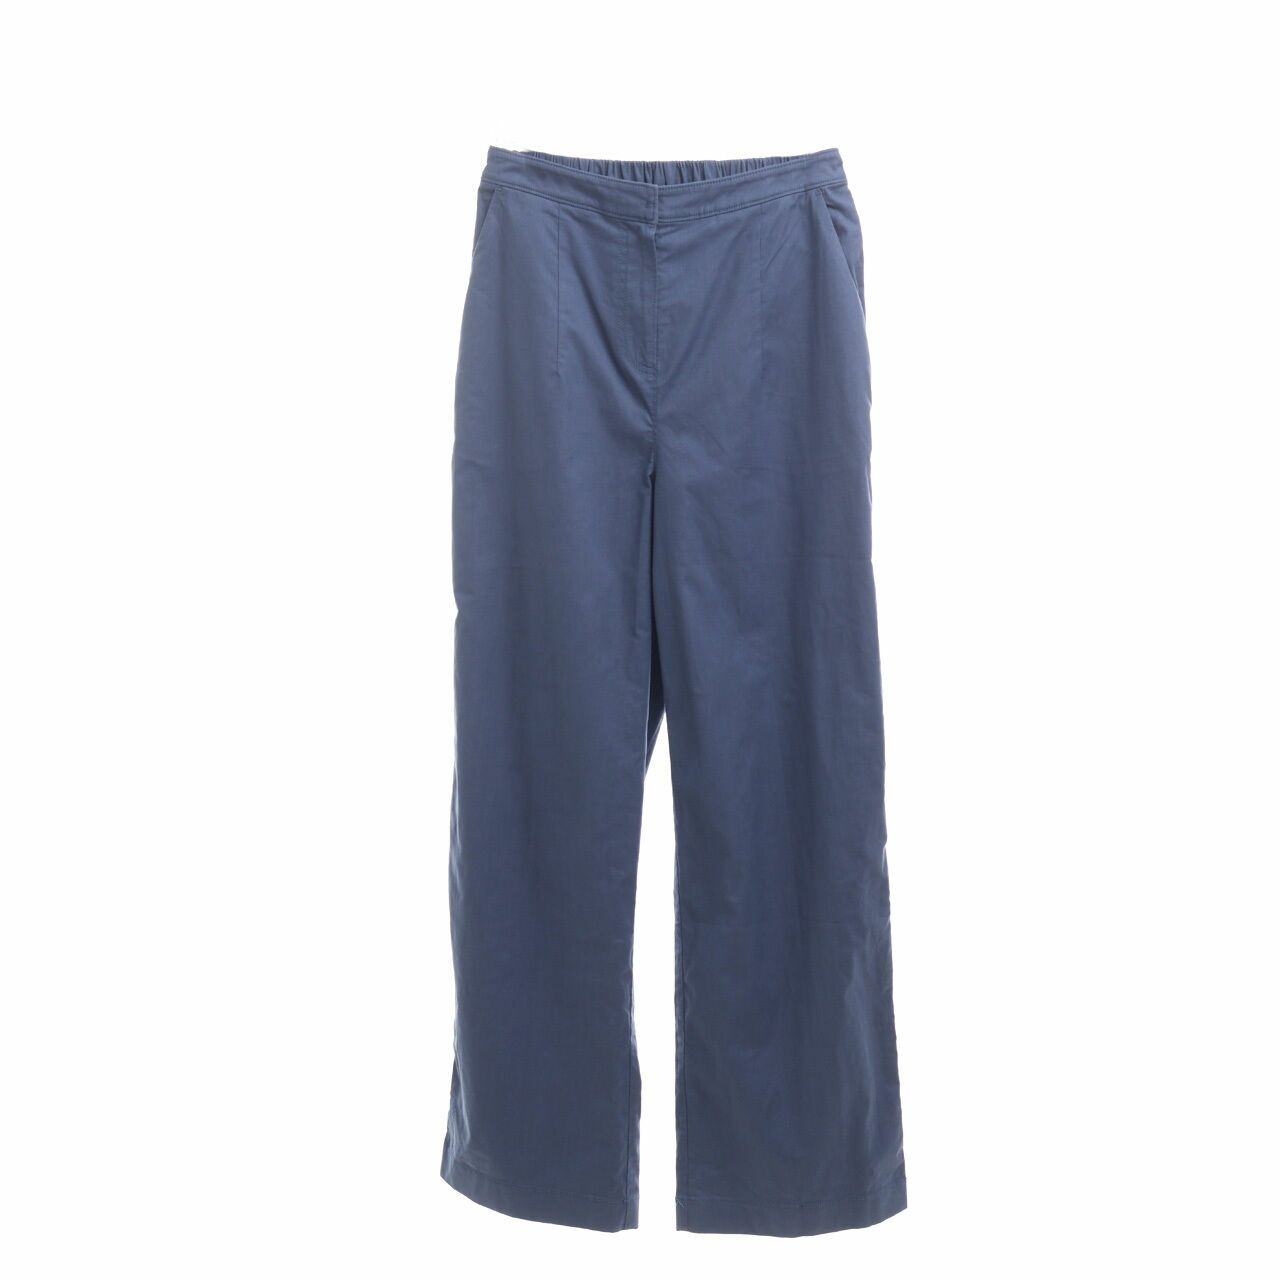 1 by O'2nd Blue Denim Long Pants